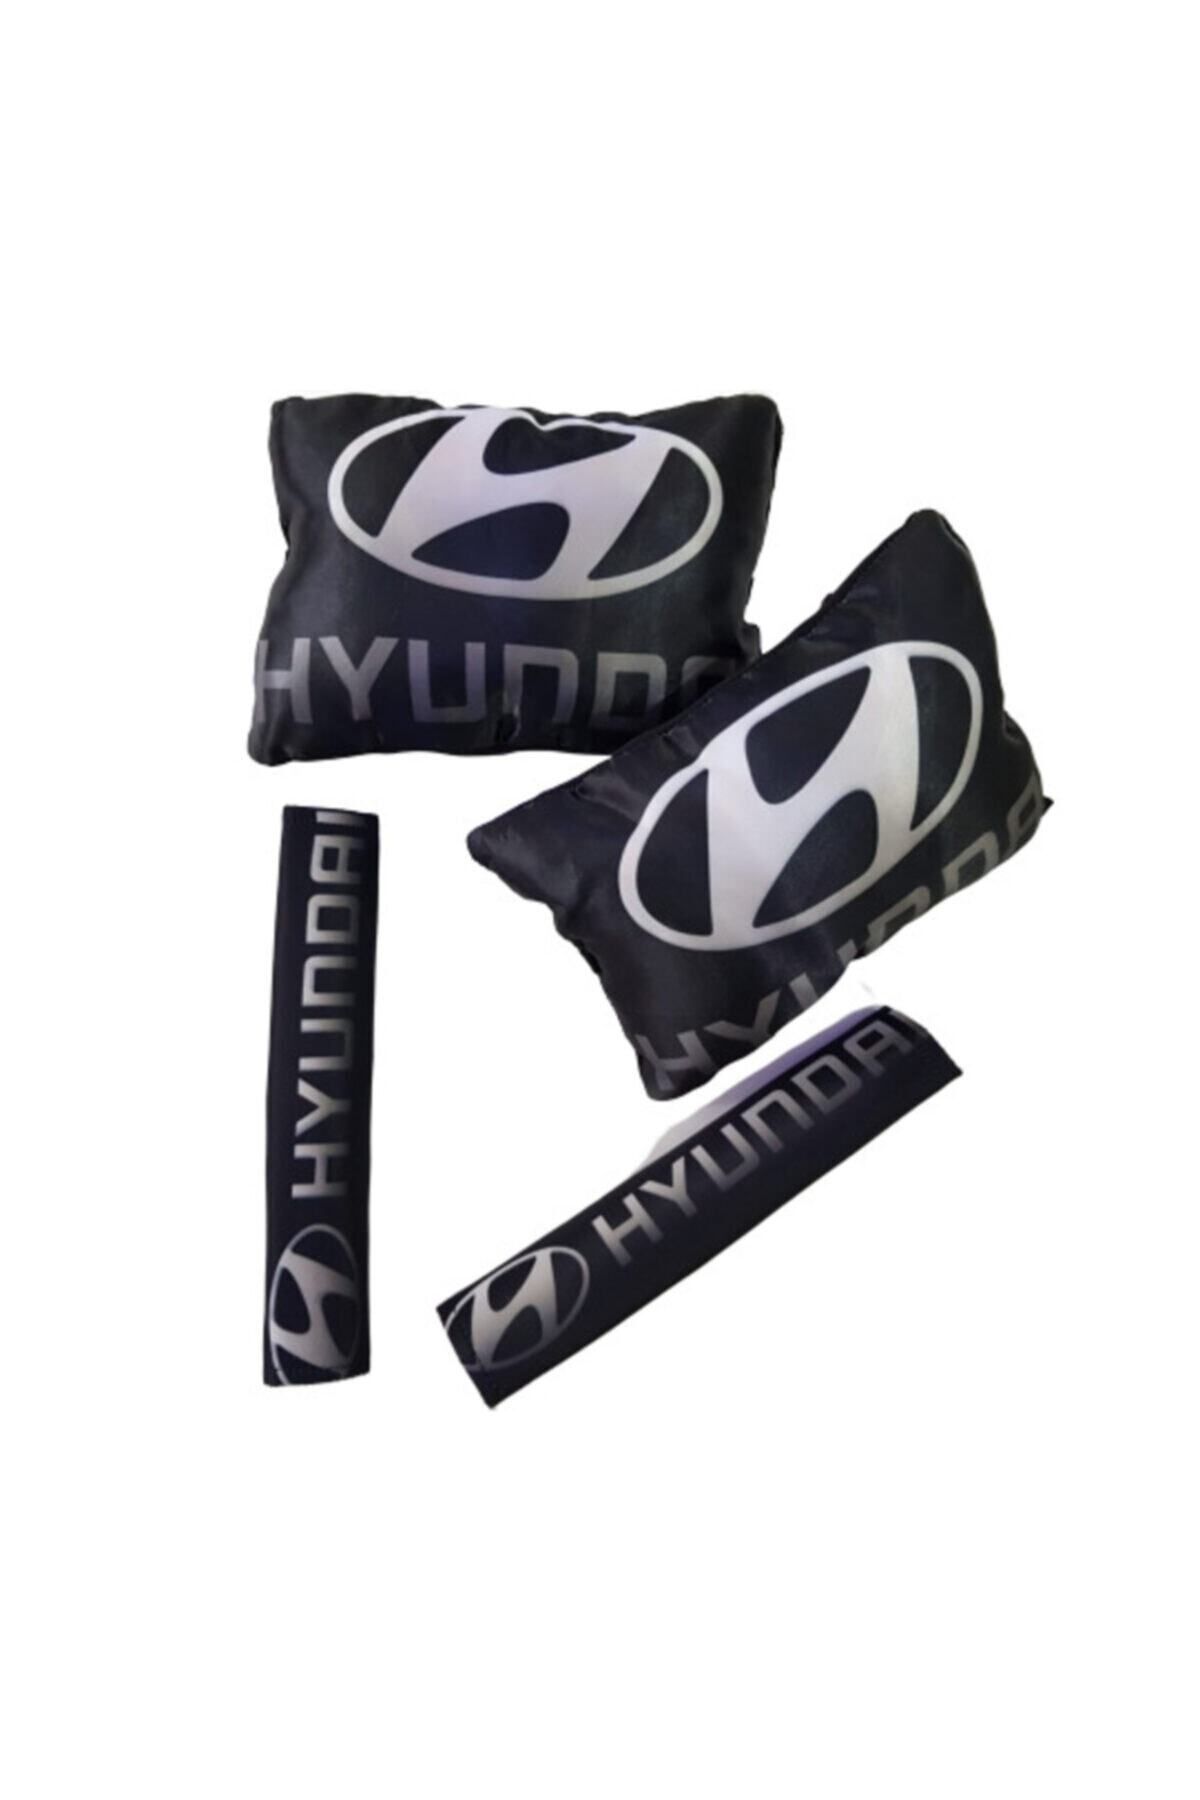 Hyundai Siyah Boyun Yastığı Kemer Konforu